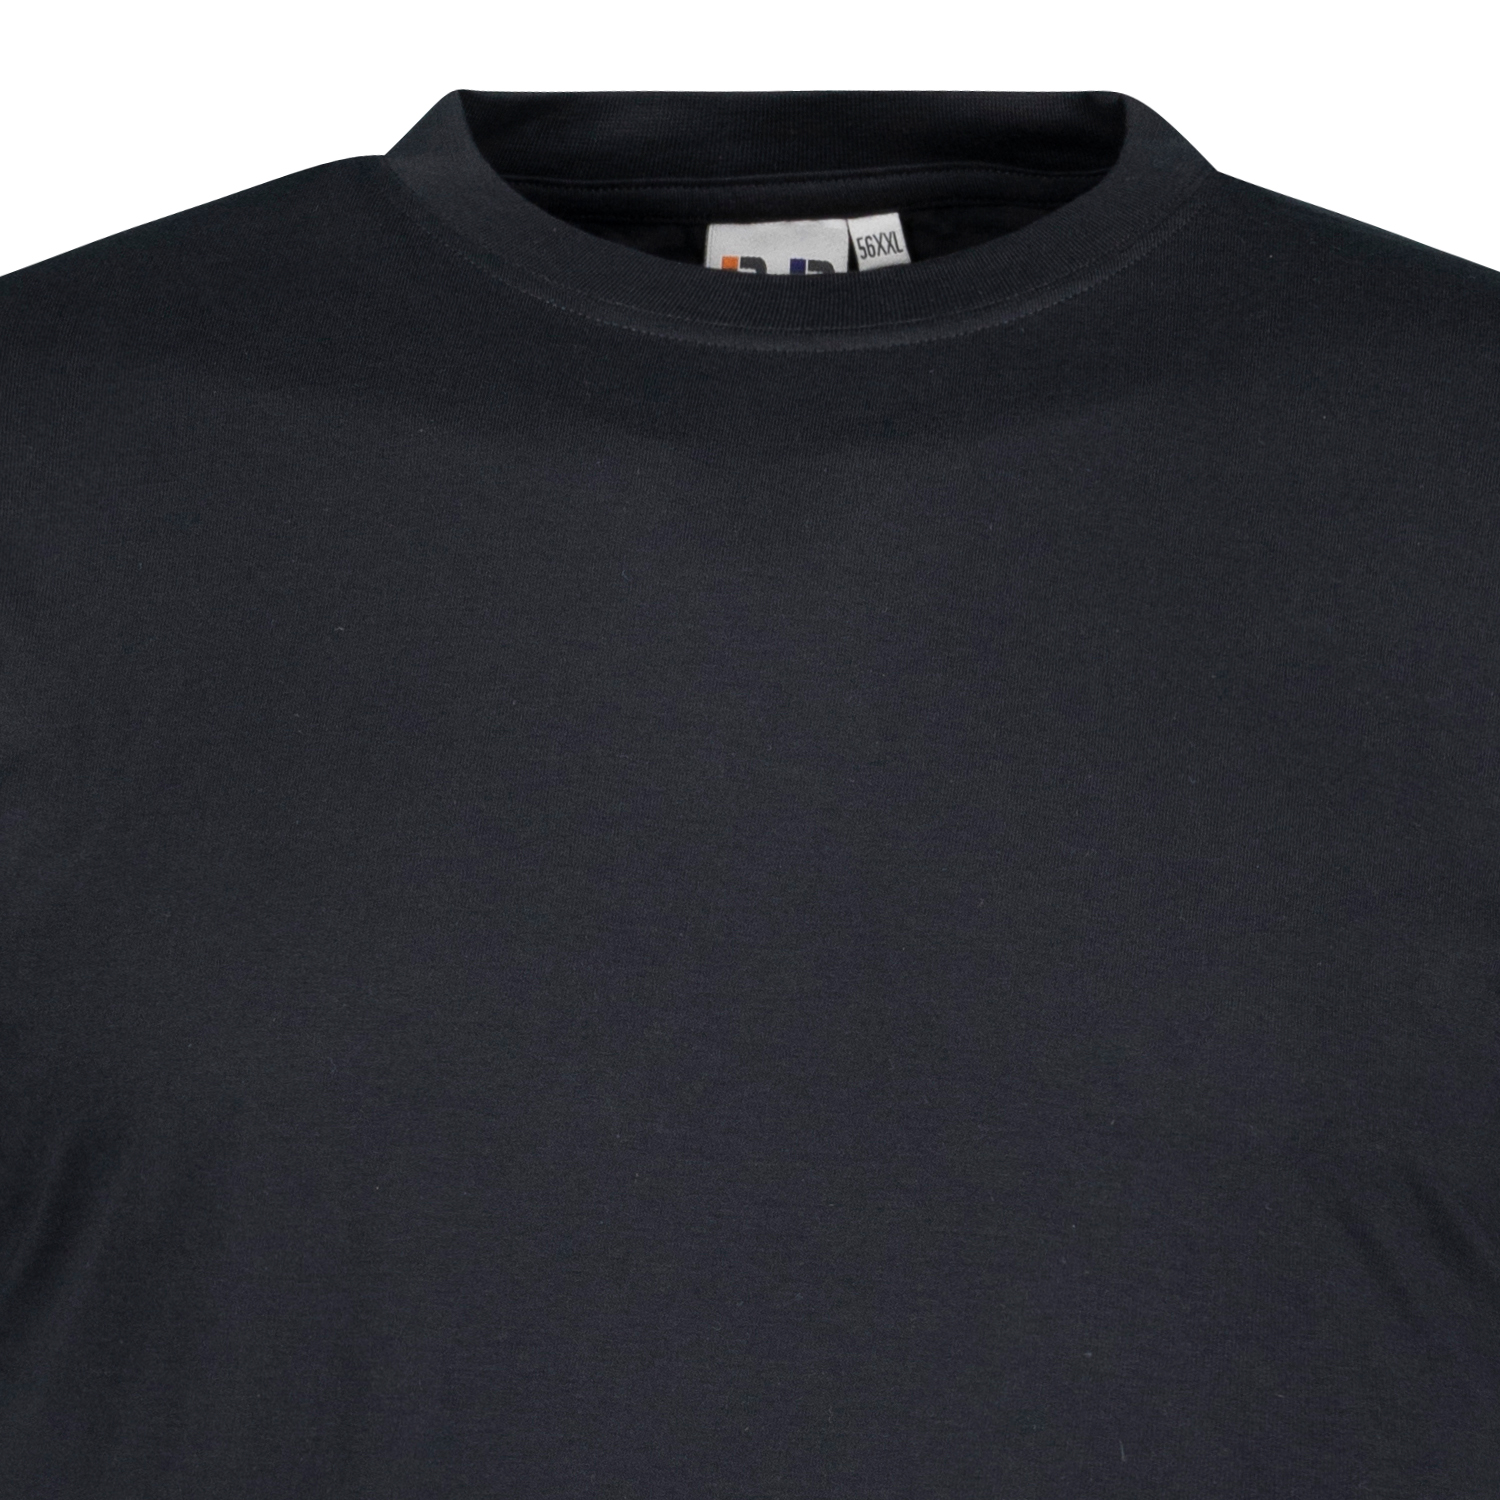 Black double pack t-shirt by BigBasics up to kingsize 8XL